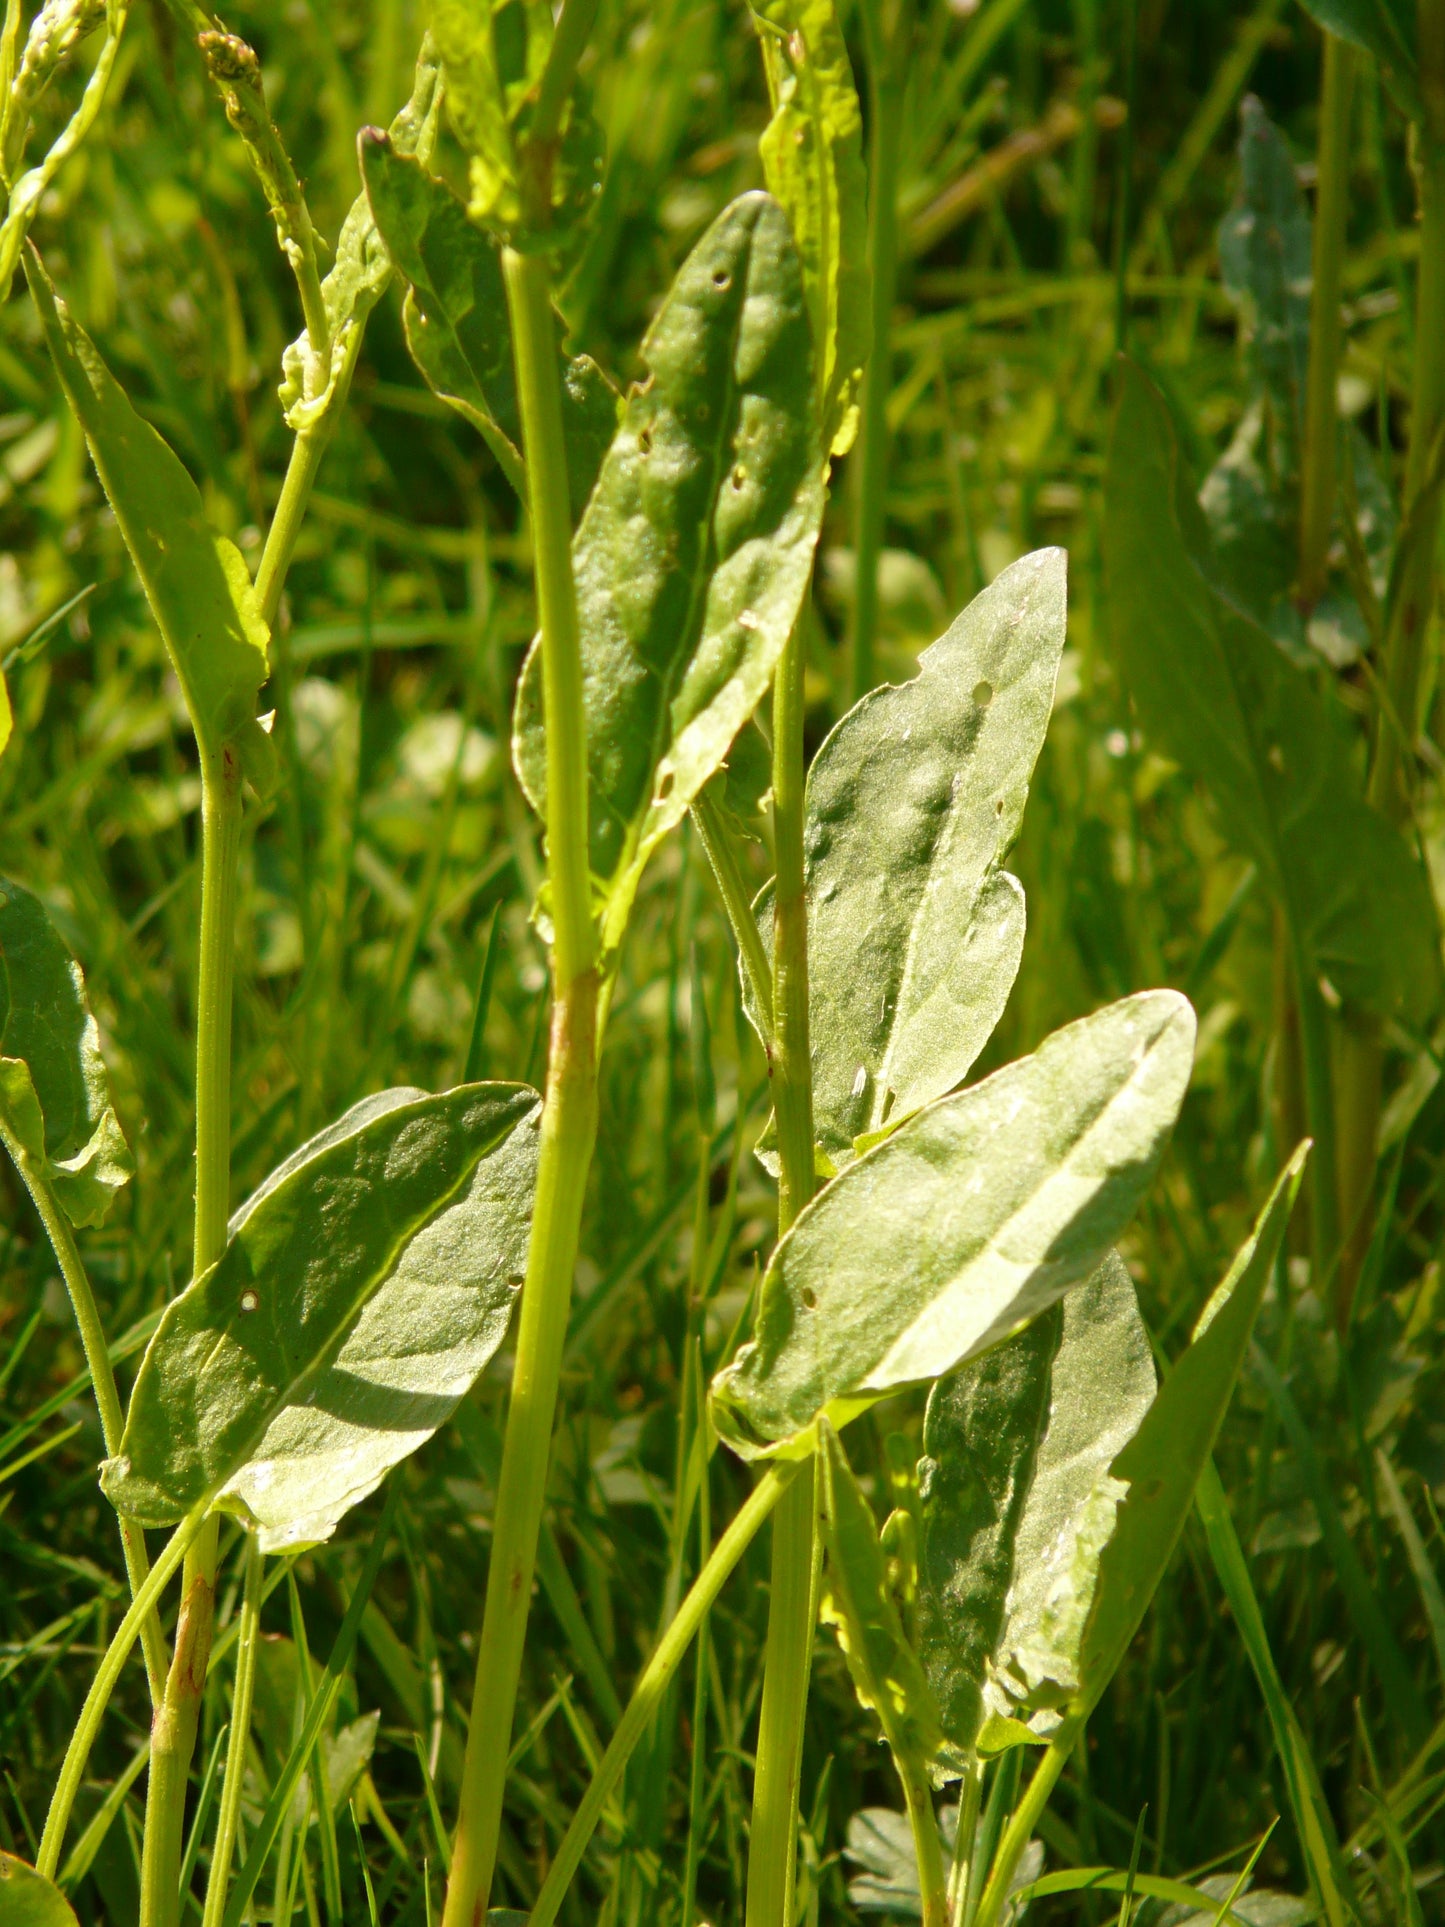 Bio Sauerampfer (Rumex x acetosa) - Topfpflanze